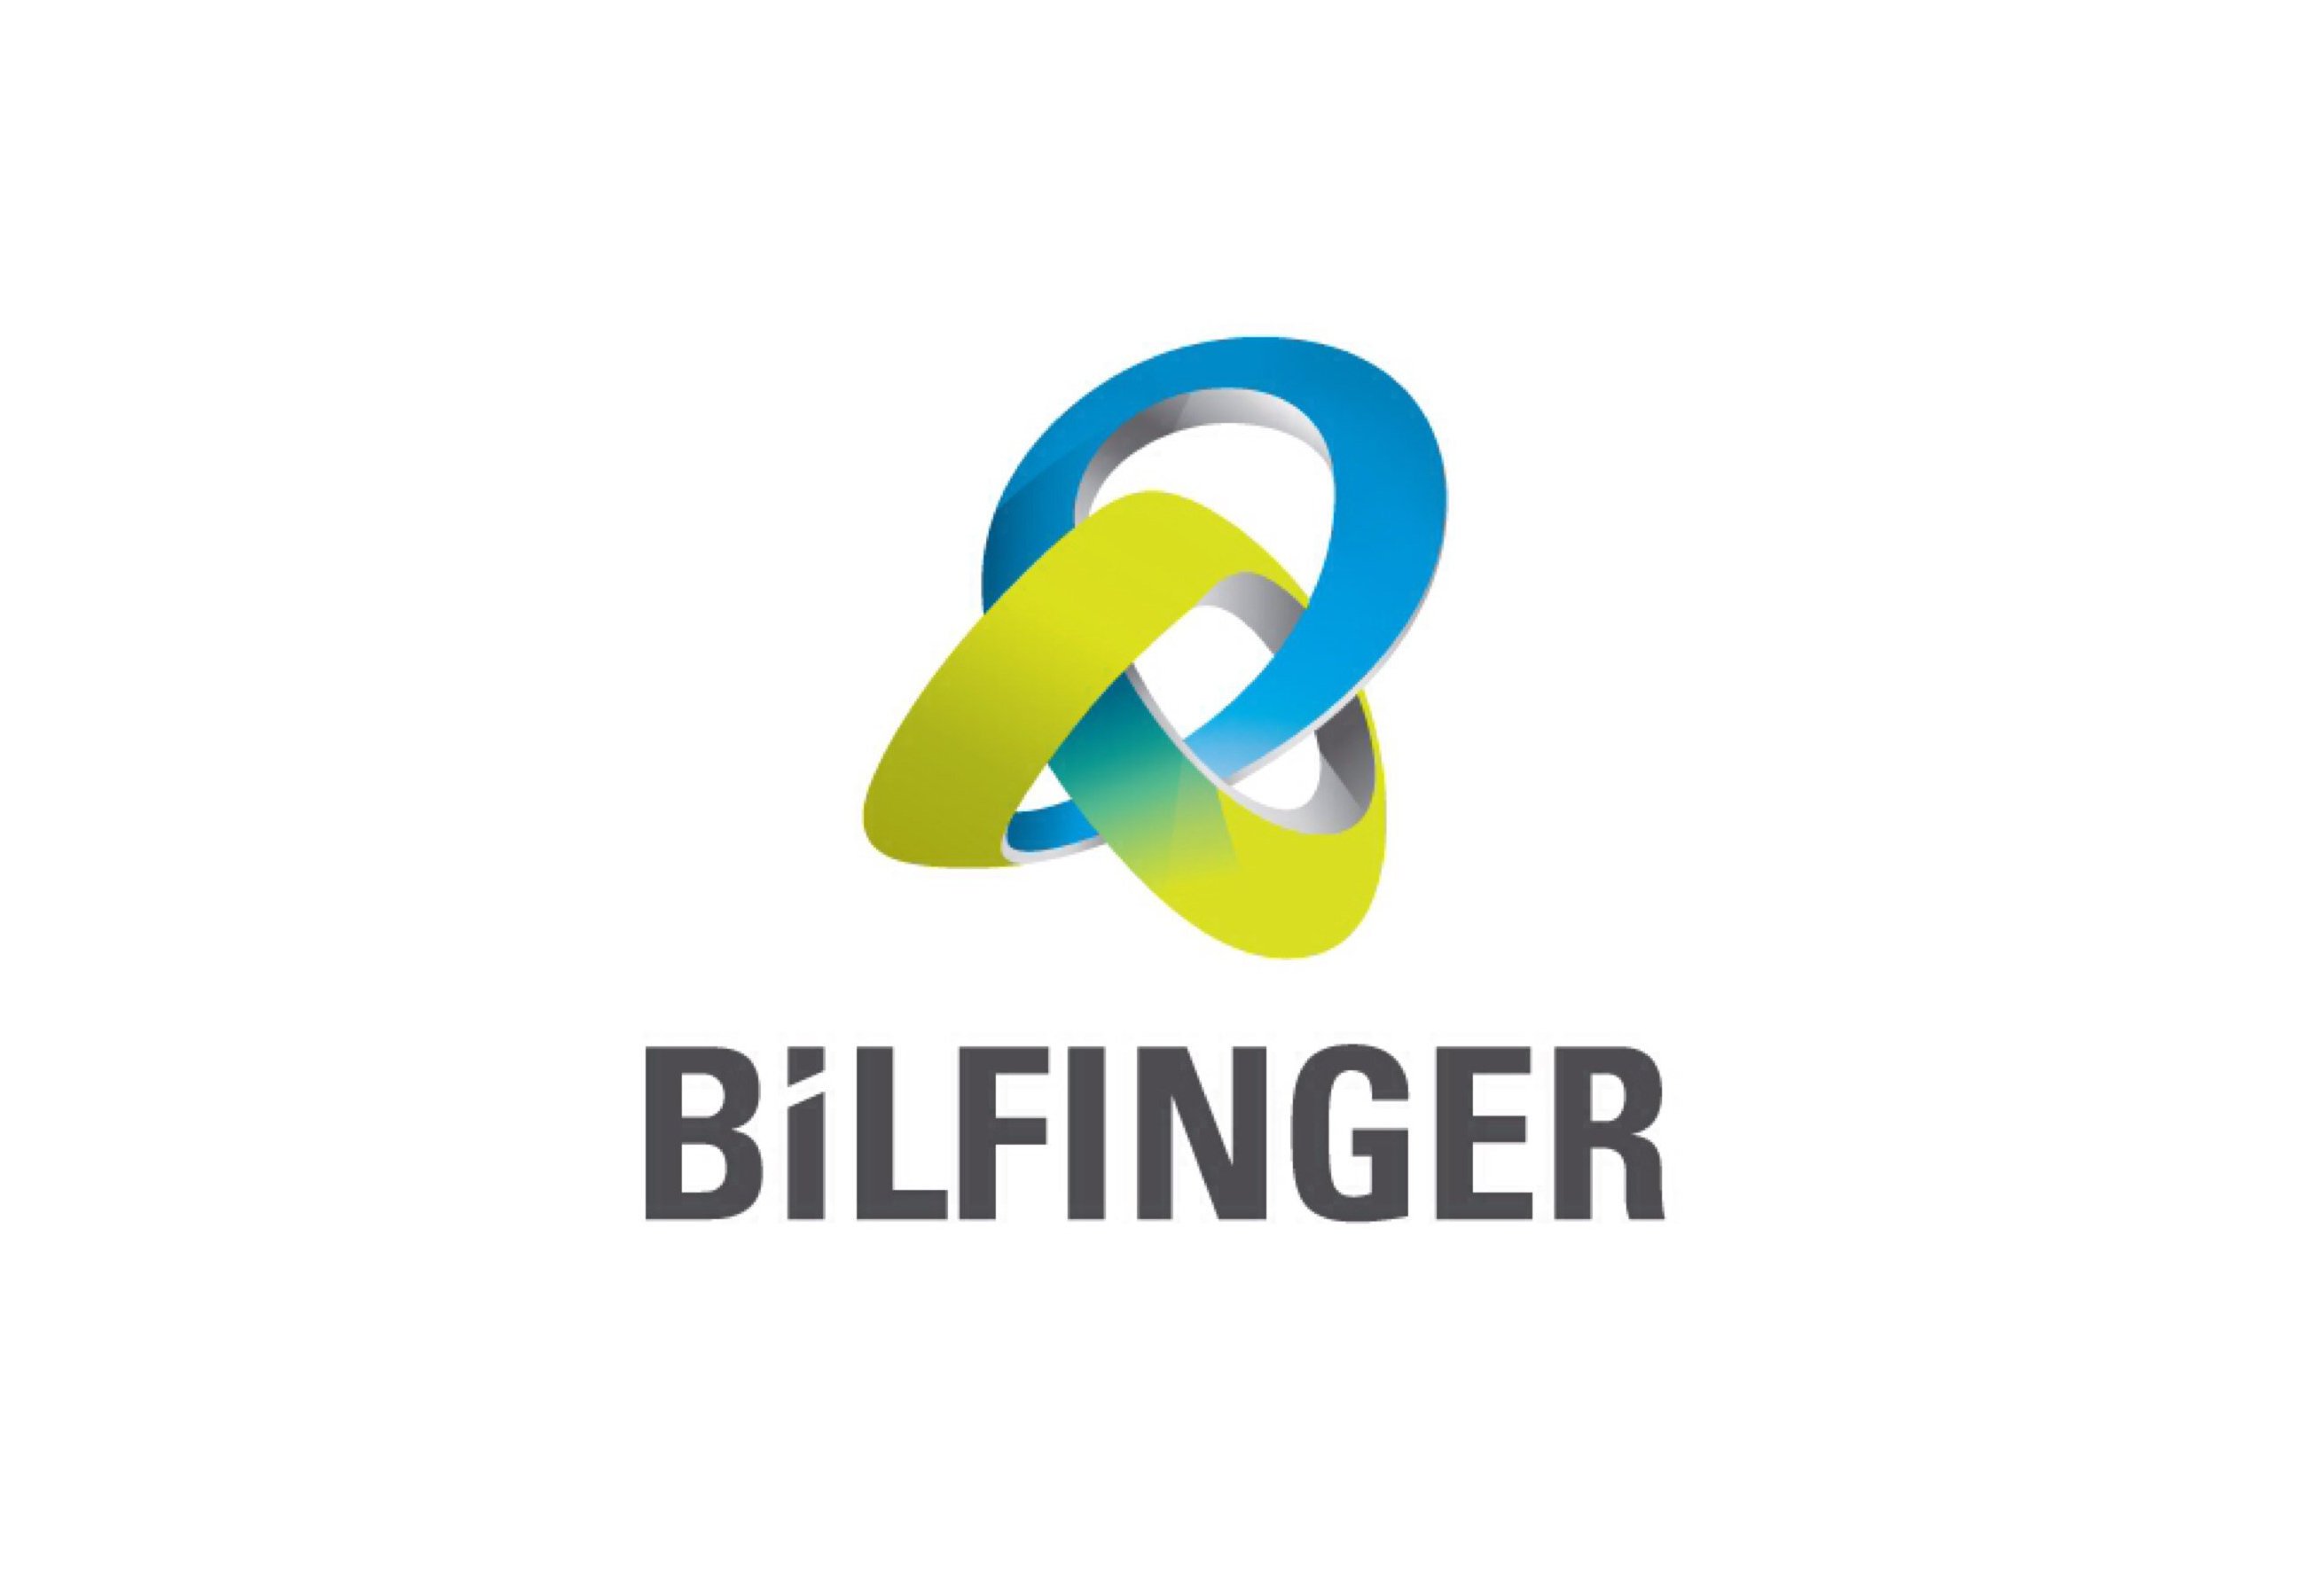 Bilfinger Logo - Bilfinger, Transparent background PNG HD thumbnail